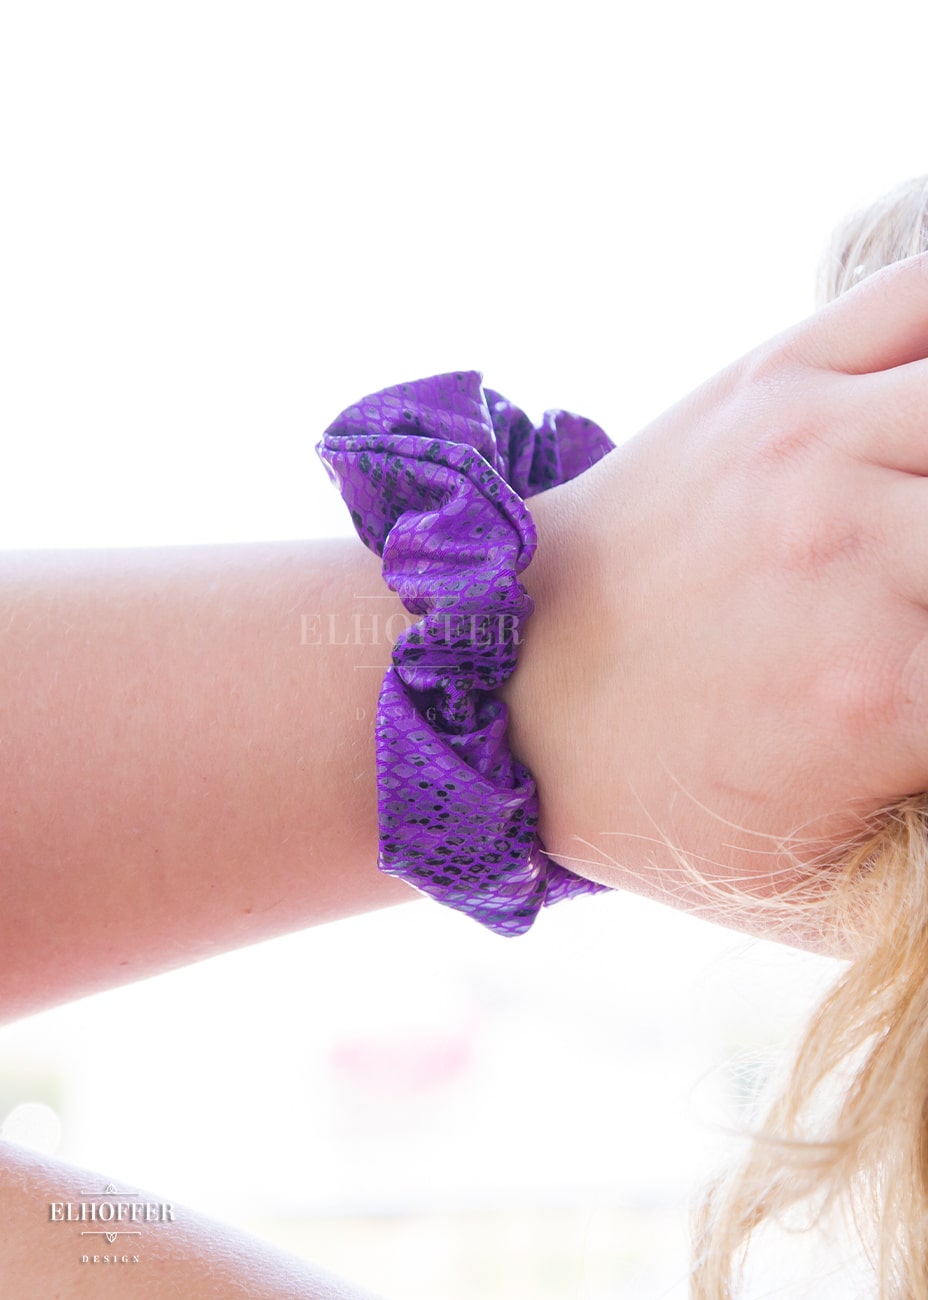 A shiny purple snake skin patterned scrunchie on a fair freckled wrist.